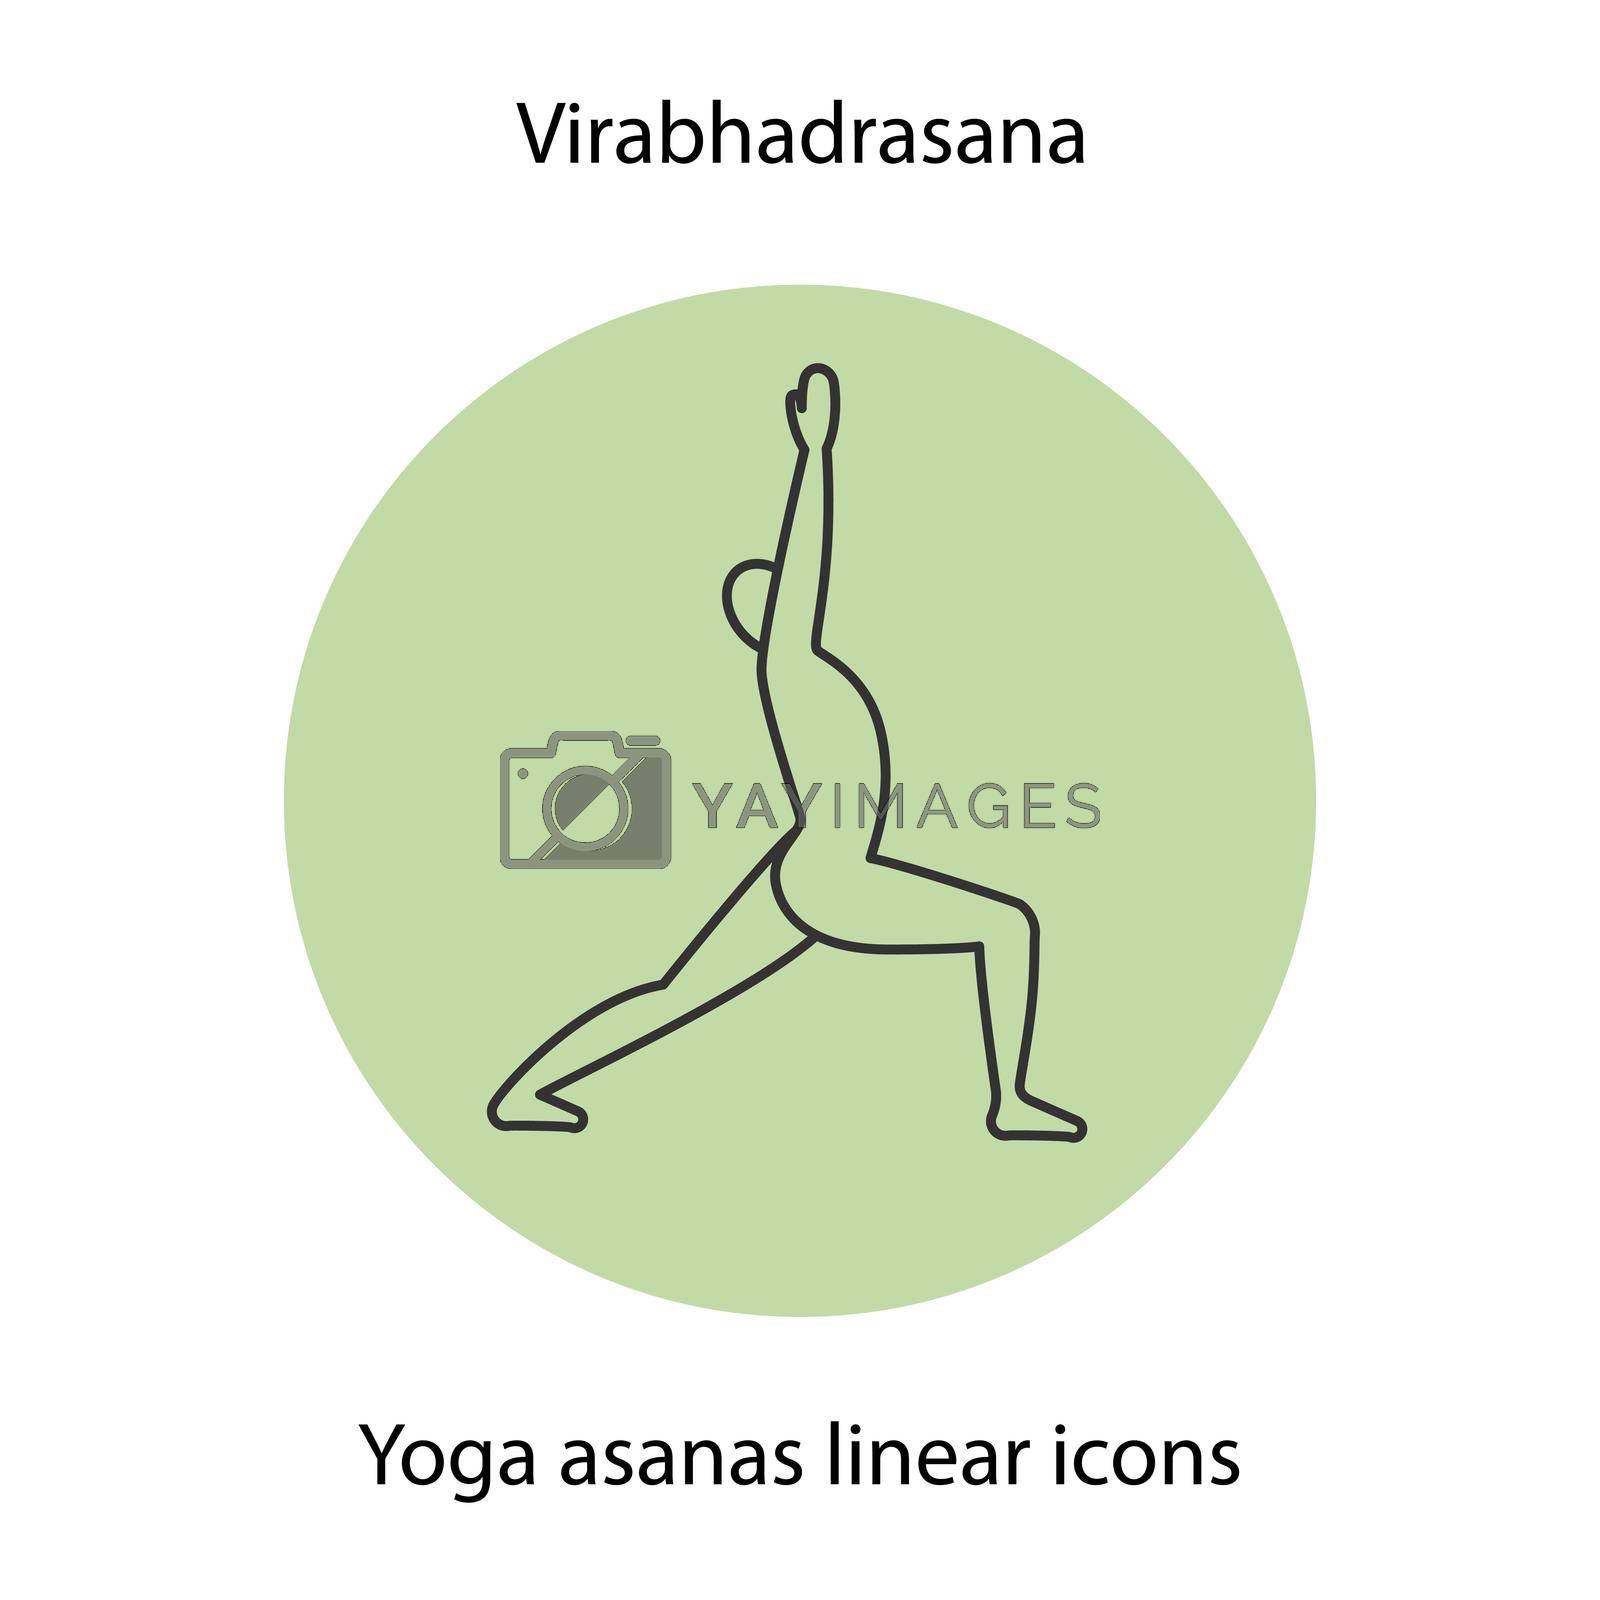 Virabhadrasana yoga position linear icon. Thin line illustration. Yoga asana contour symbol. Vector isolated outline drawing